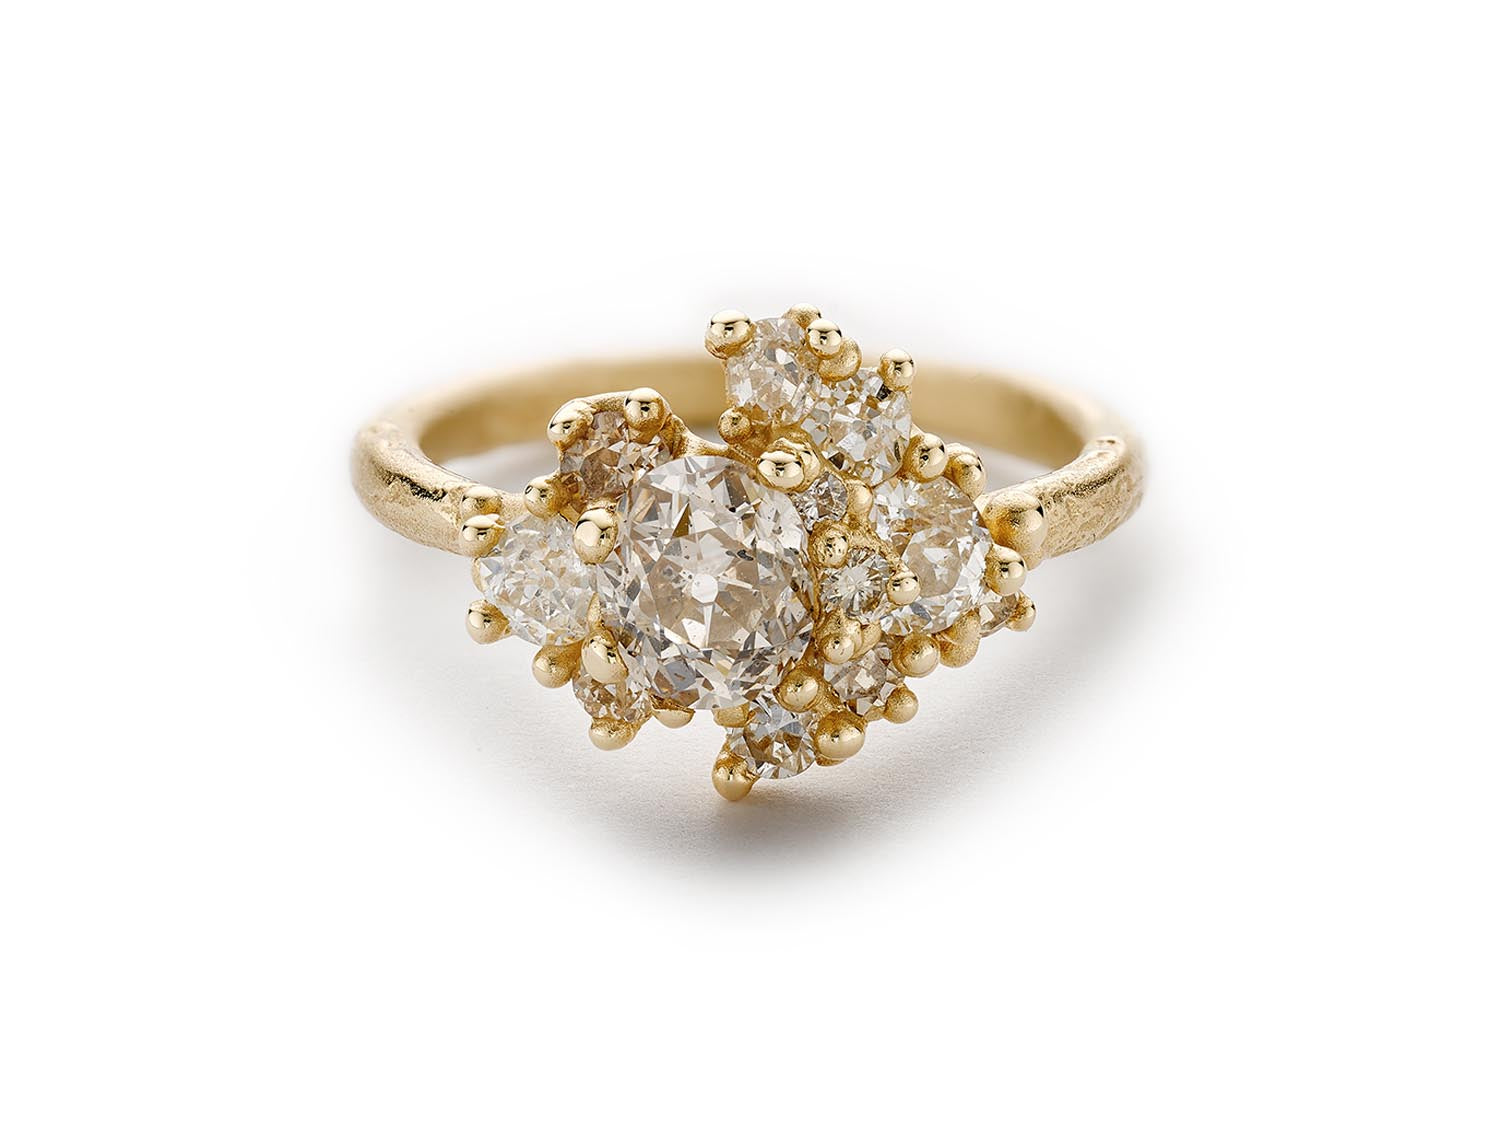 Simon G 18k Two-tone Gold Diamond Fashion Ring | Almassian Jewelers, LLC |  Grand Rapids, MI